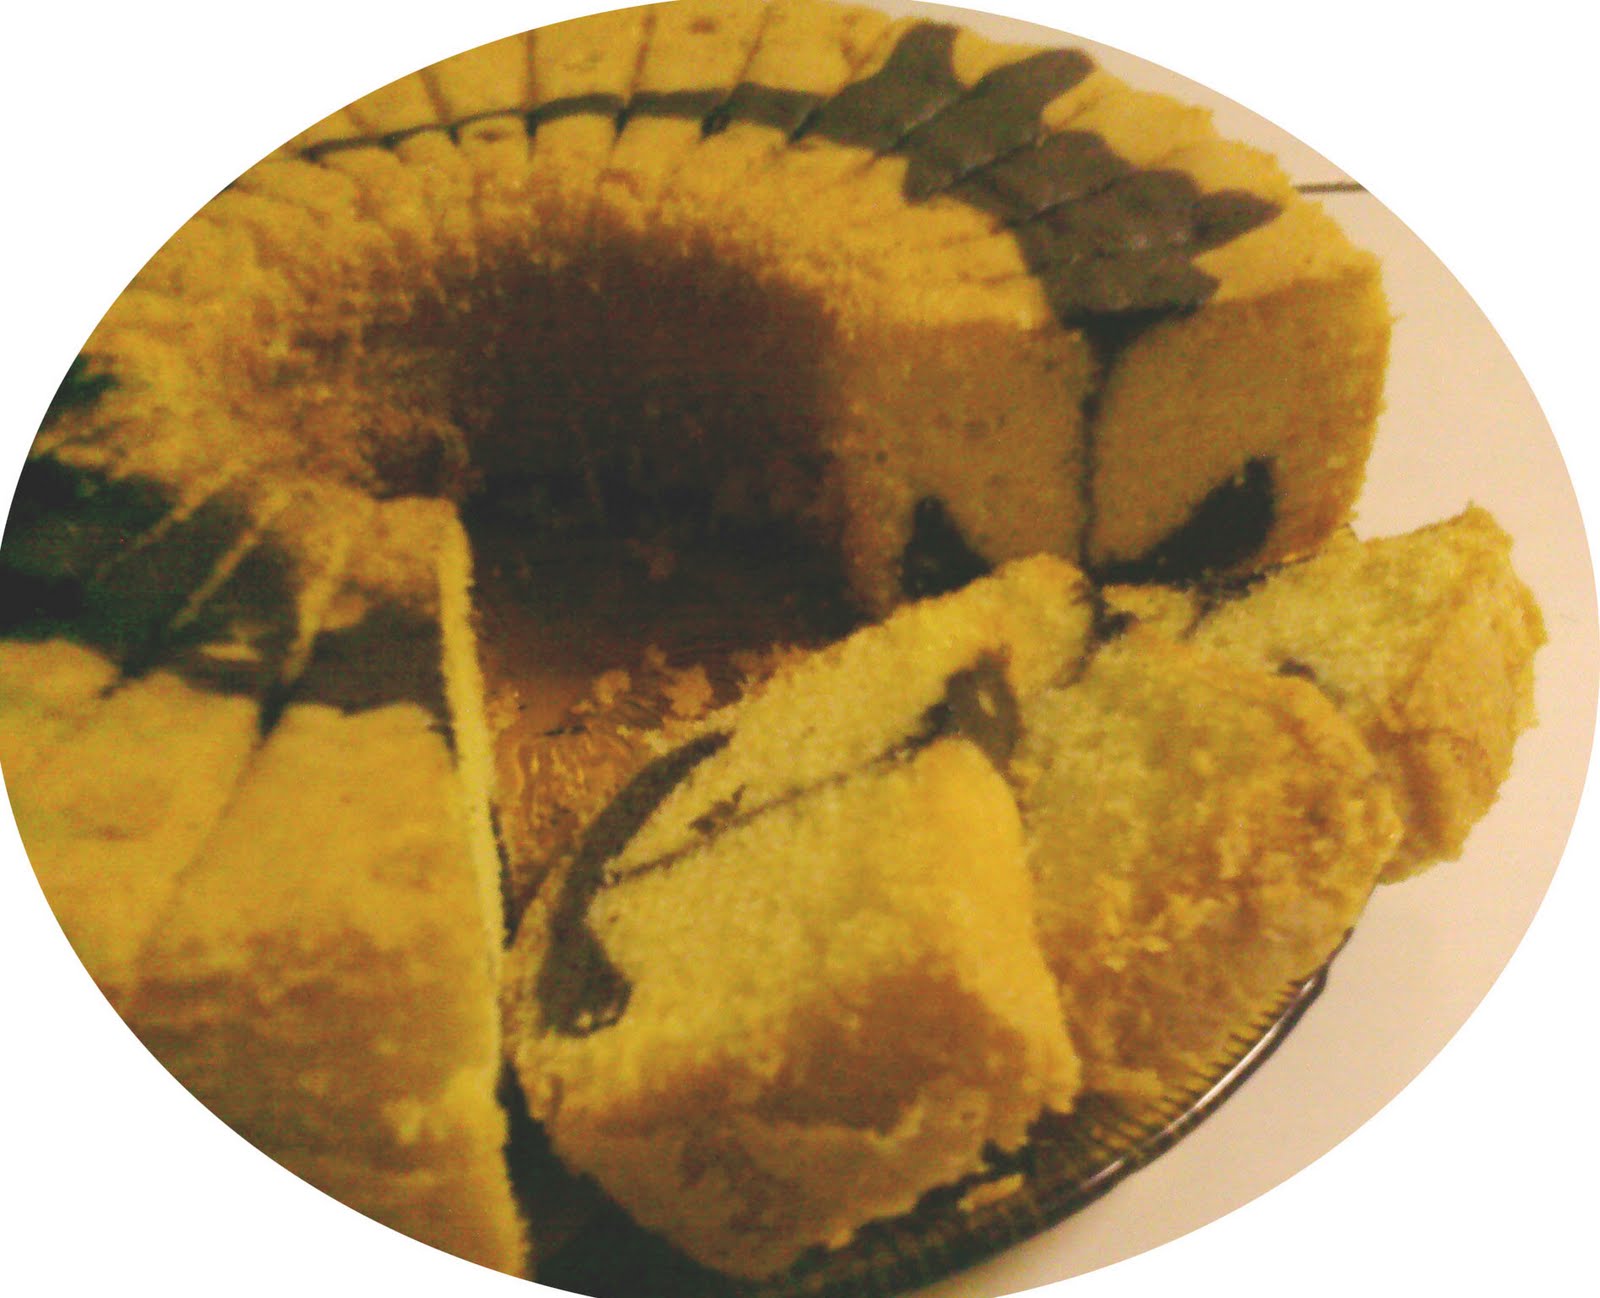 Pin Aneka Kue Basah  Ulang Tahun Dan Cookies Cake on Pinterest